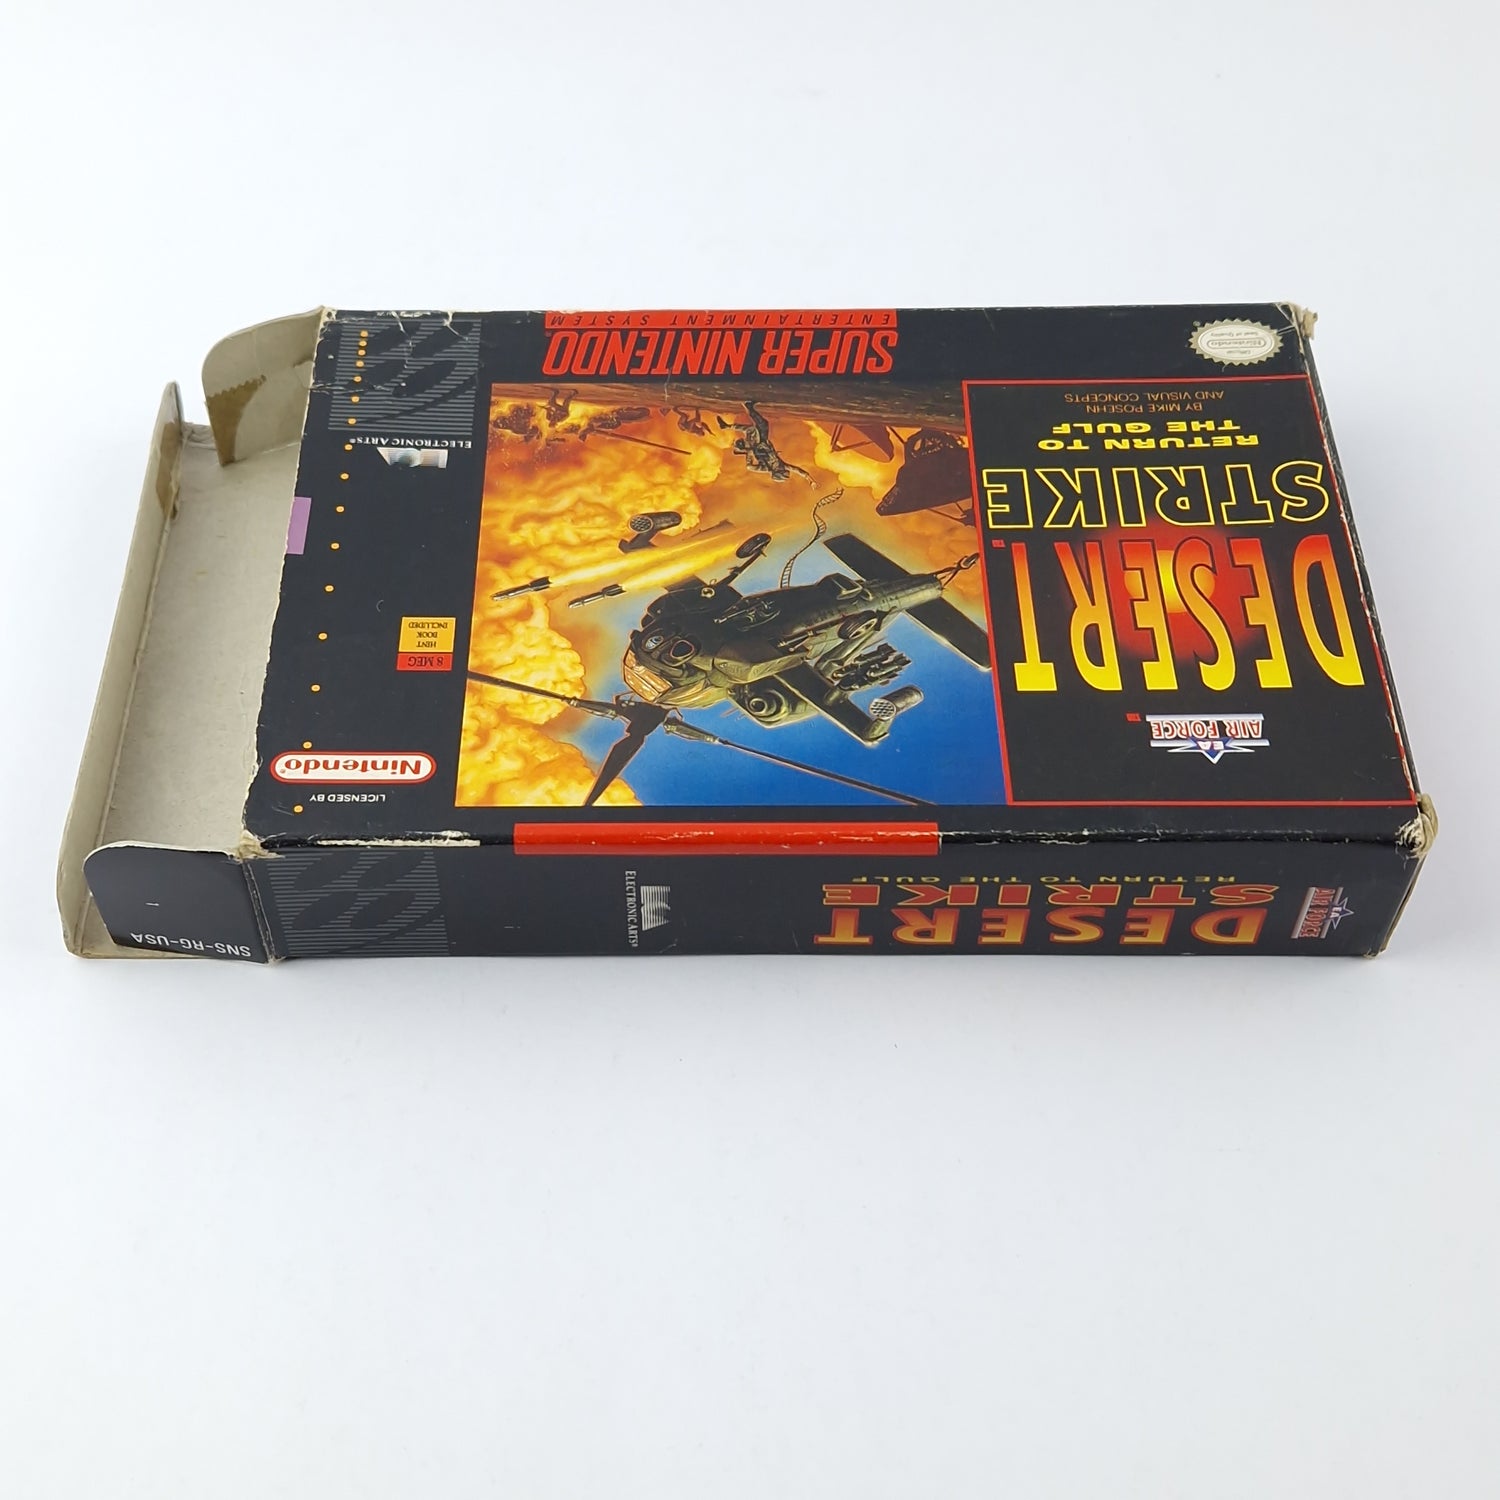 Super Nintendo Game: Desert Strike Return to the Gulf - OVP NTSC USA SNES